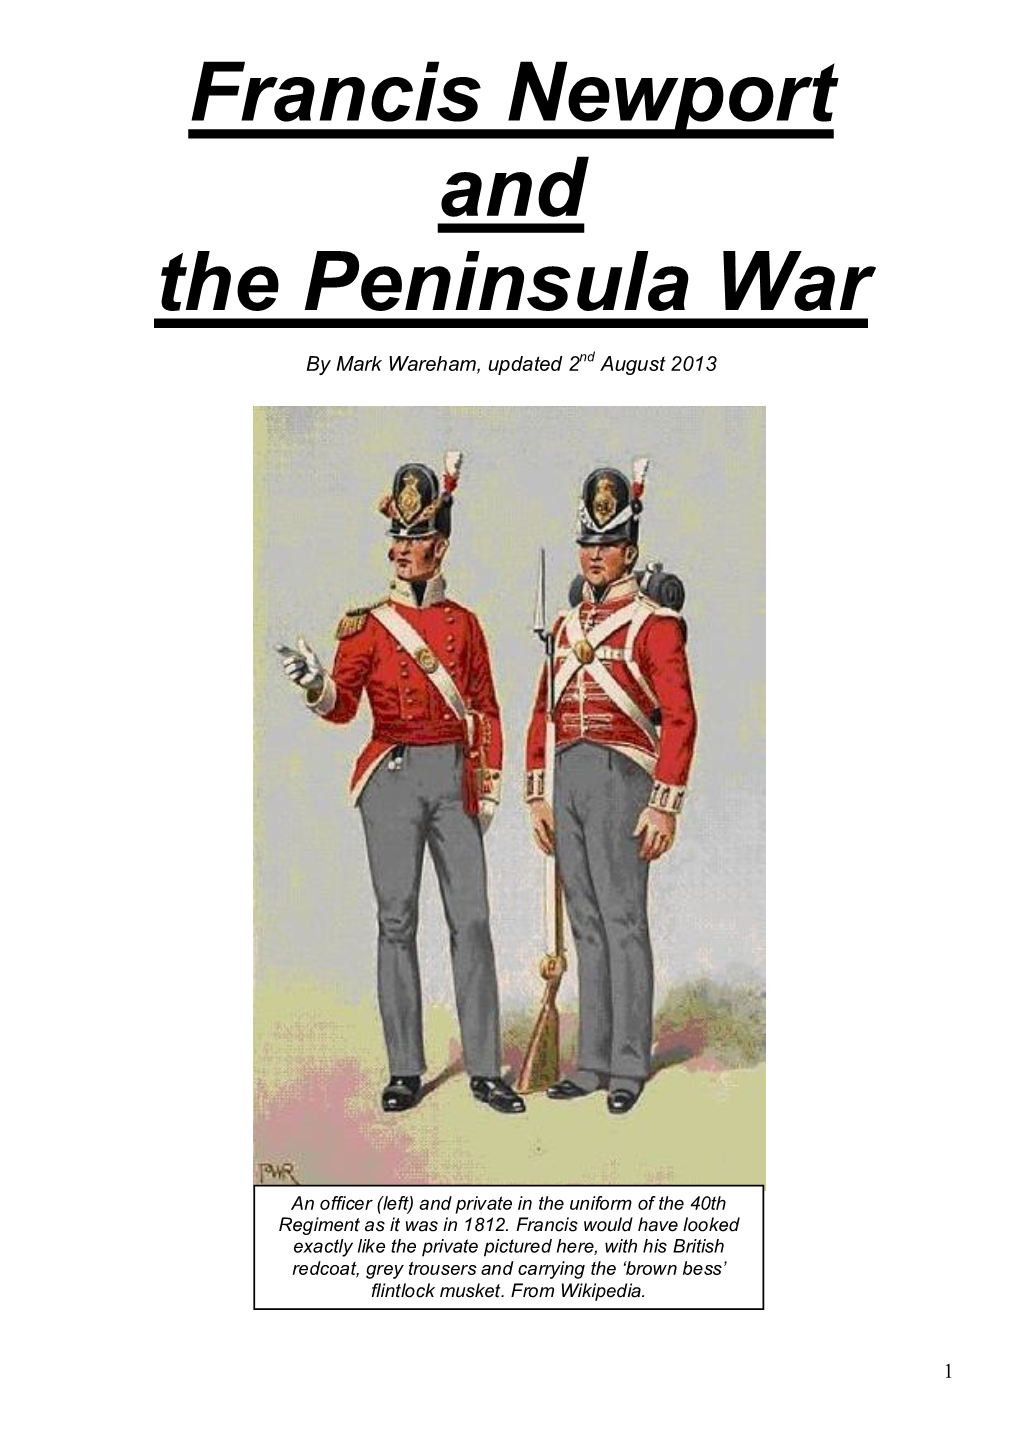 Francis Newport and the Peninsula War